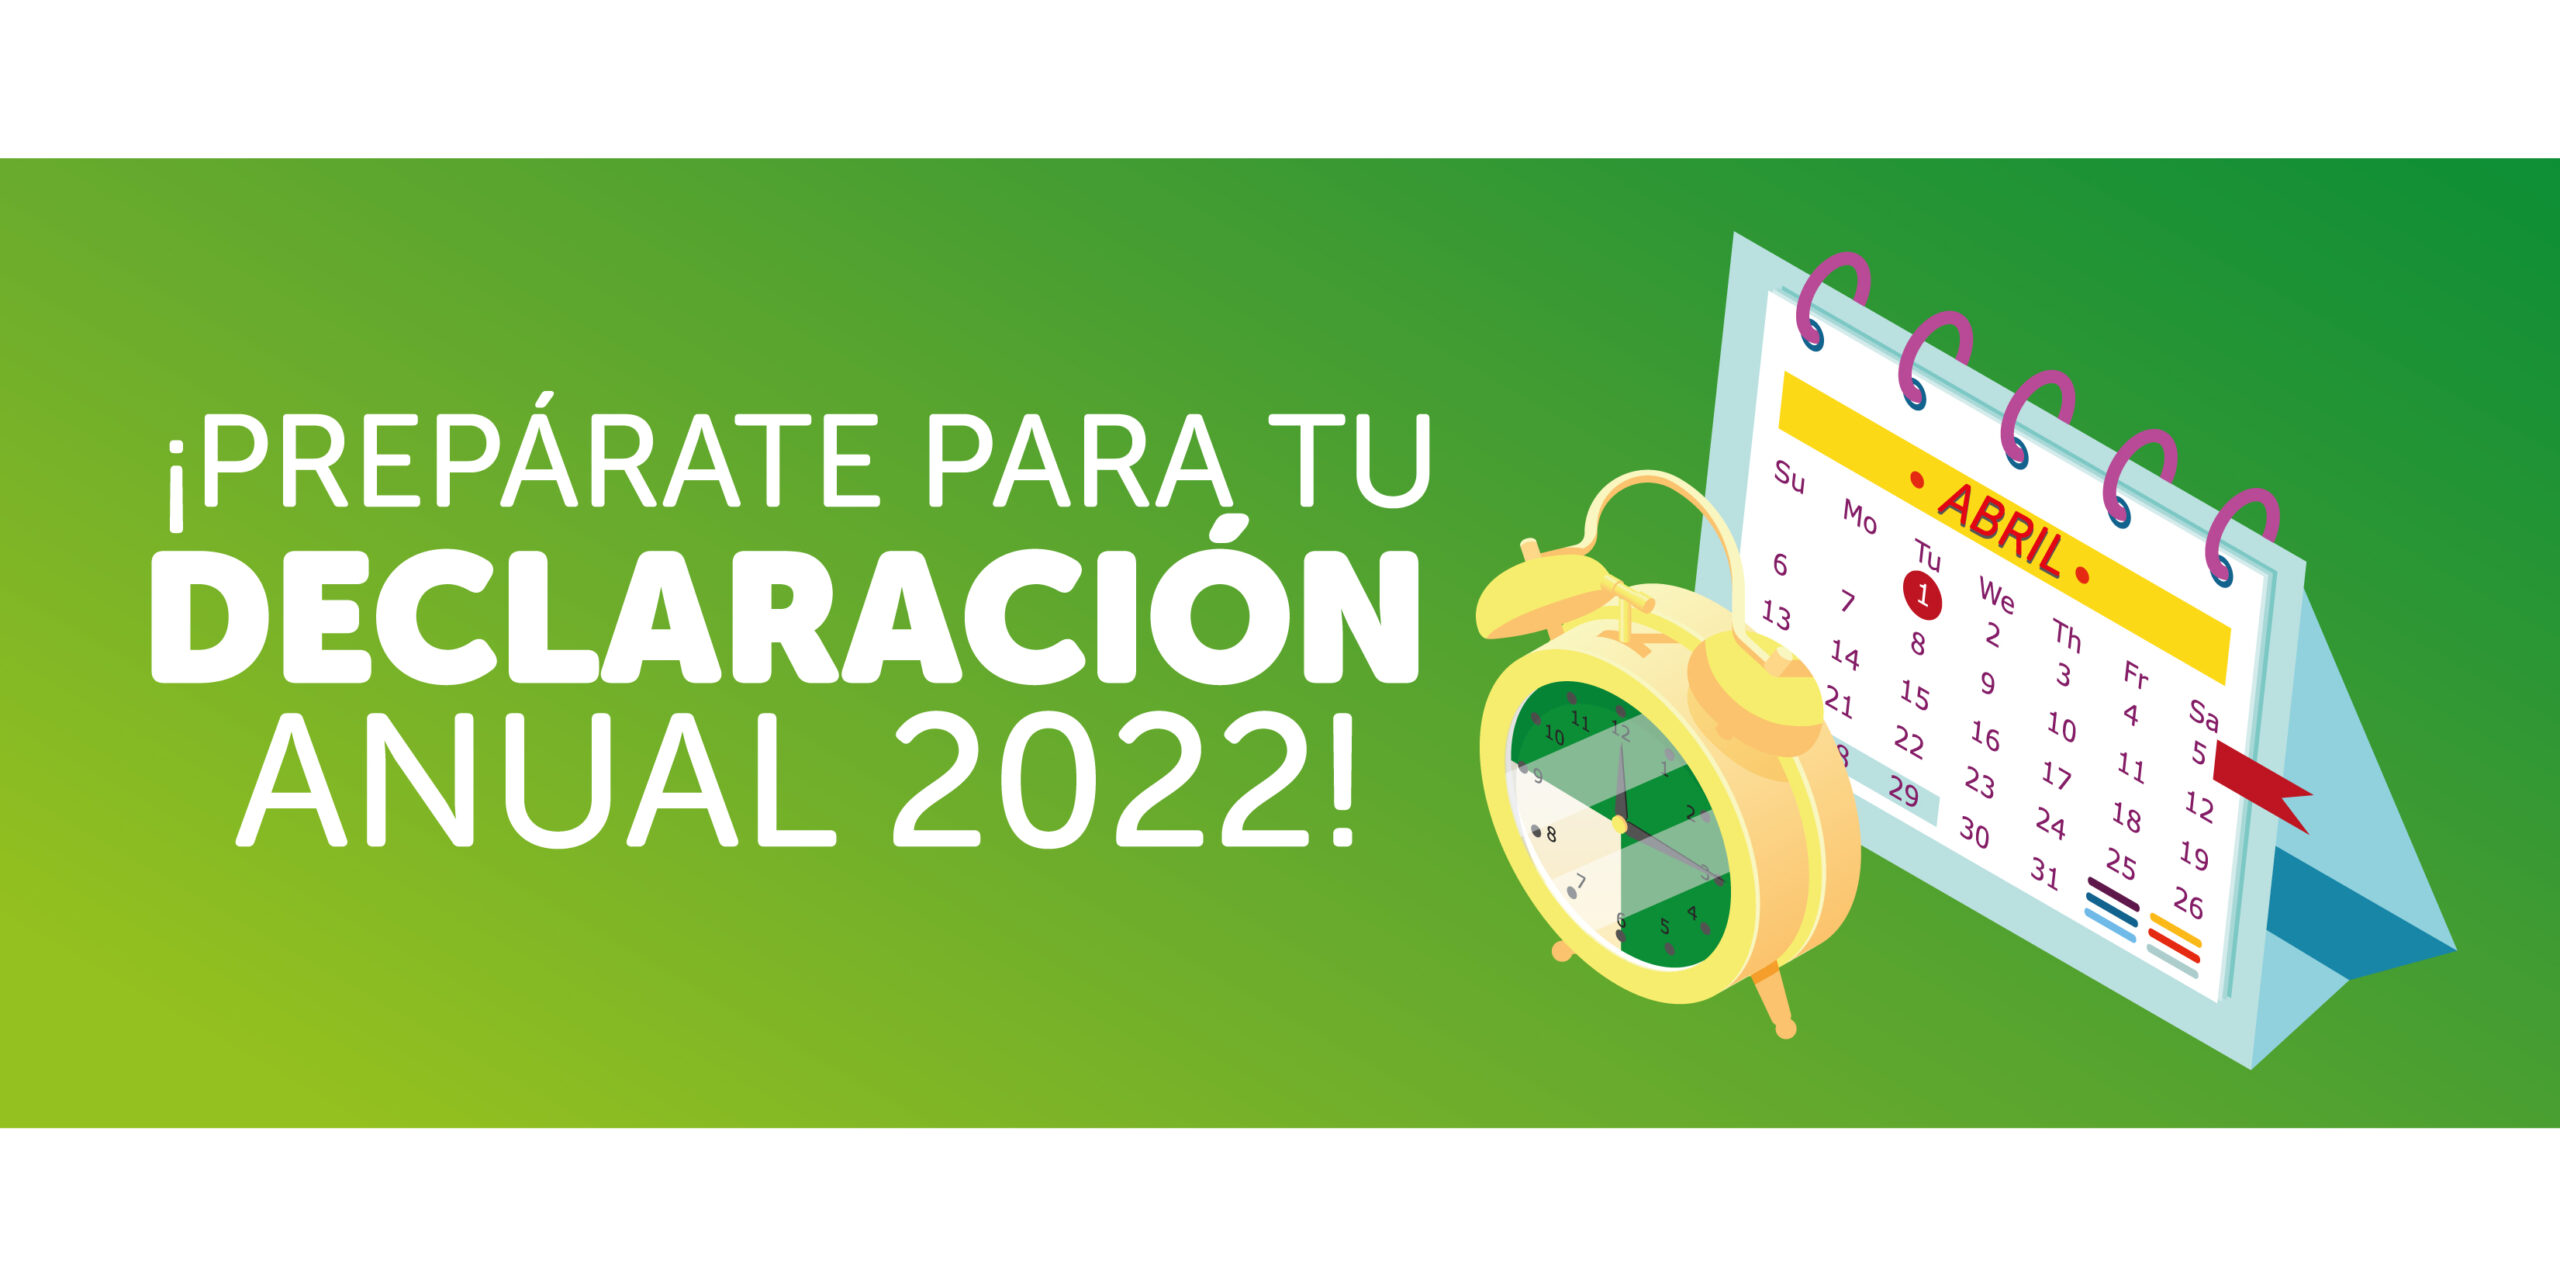 ¡PREPÁRATE PARA TU DECLARACIÓN ANUAL 2022!